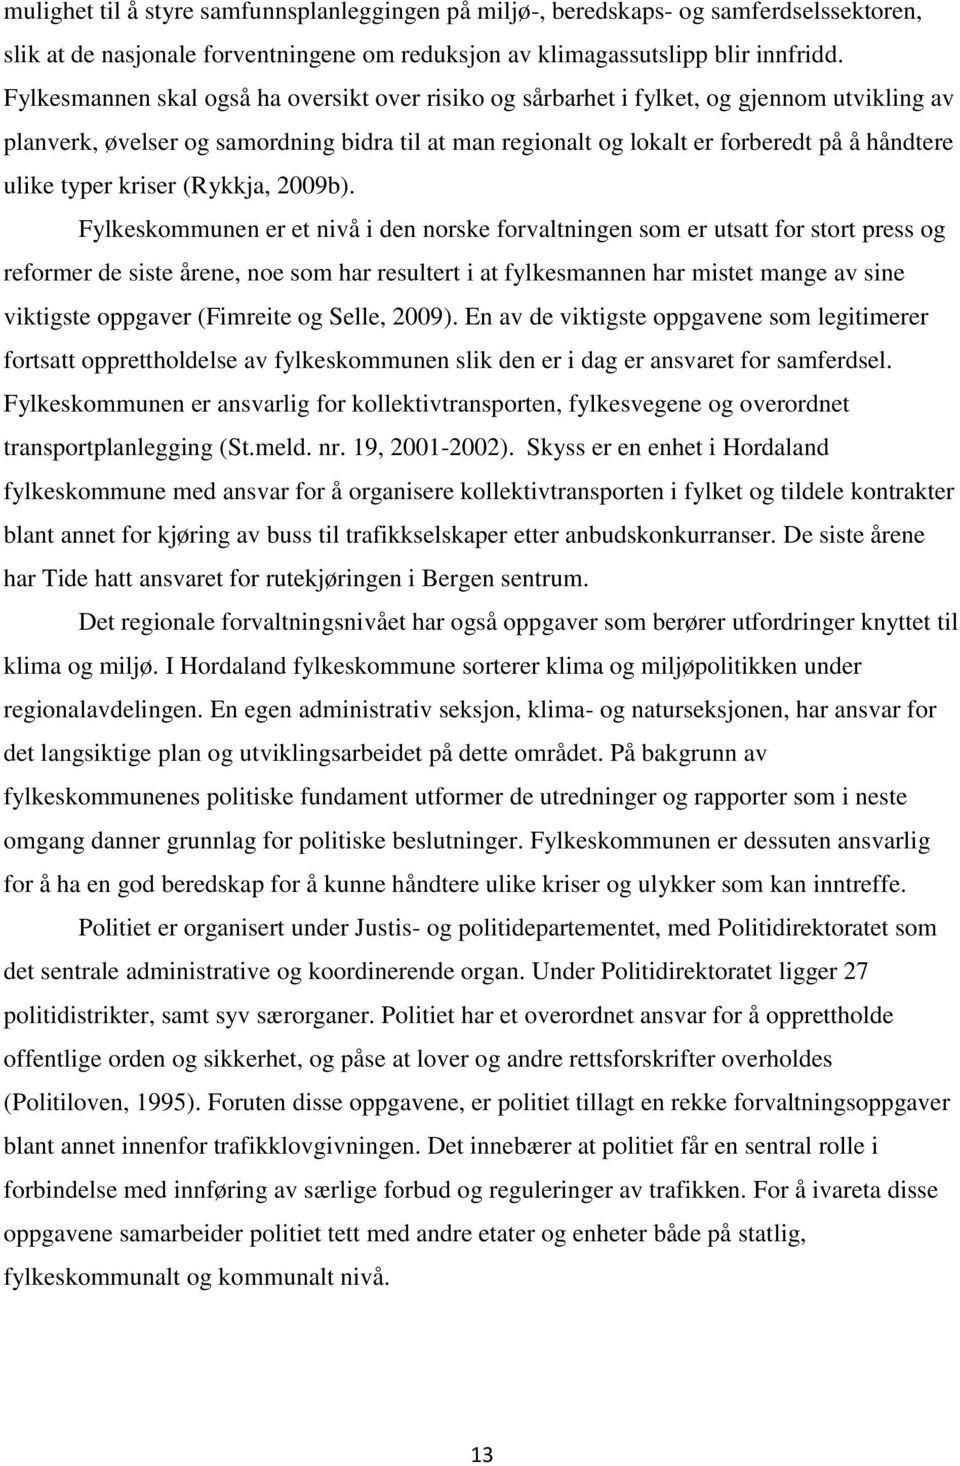 typer kriser (Rykkja, 2009b).